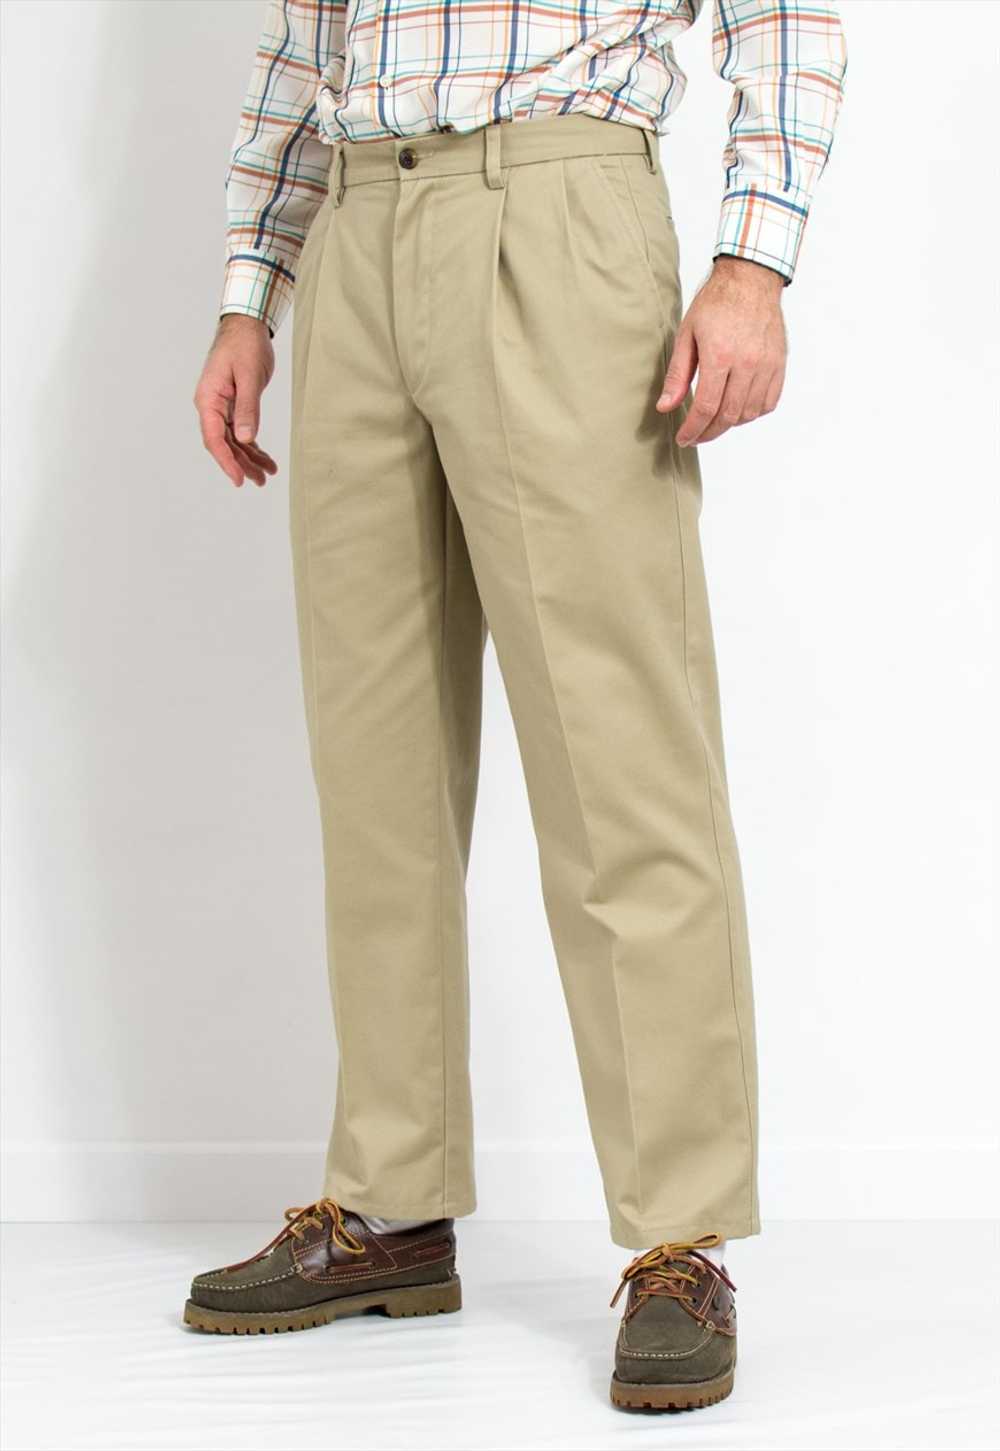 St. John's Bay Vintage pleated pants in beige siz… - image 3